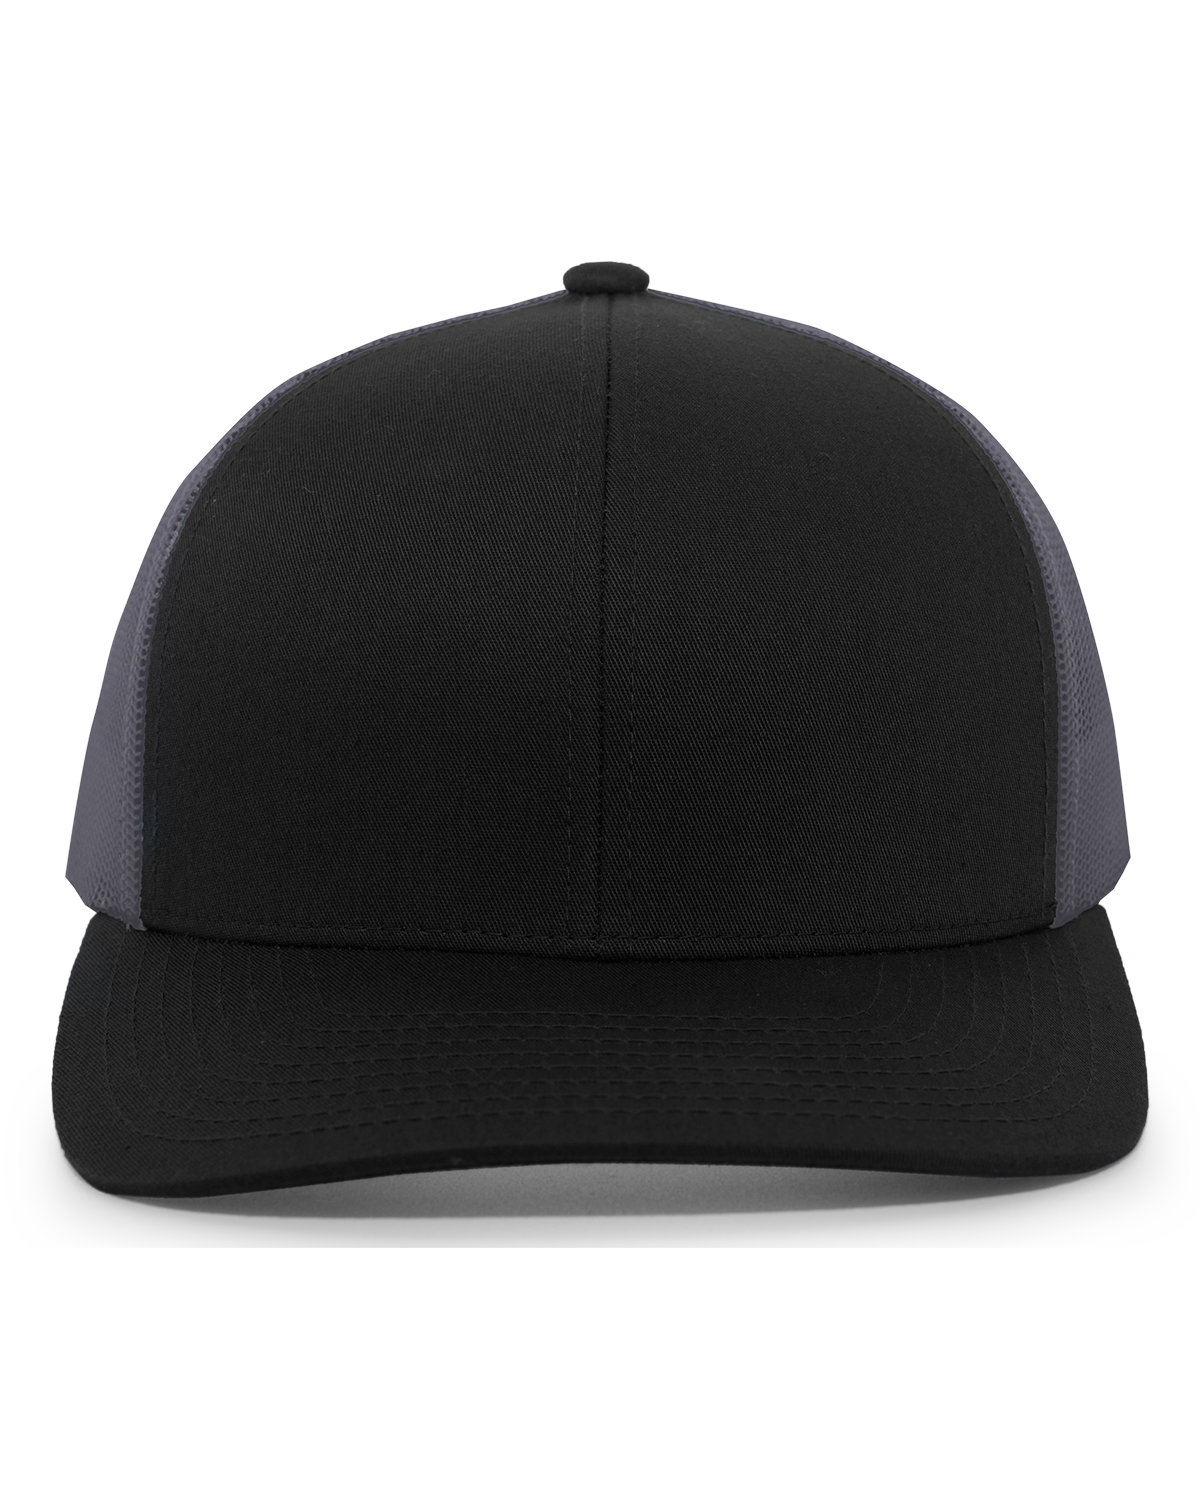 Pacific Headwear Trucker Snapback Hat BLACK/ GRAPHITE 